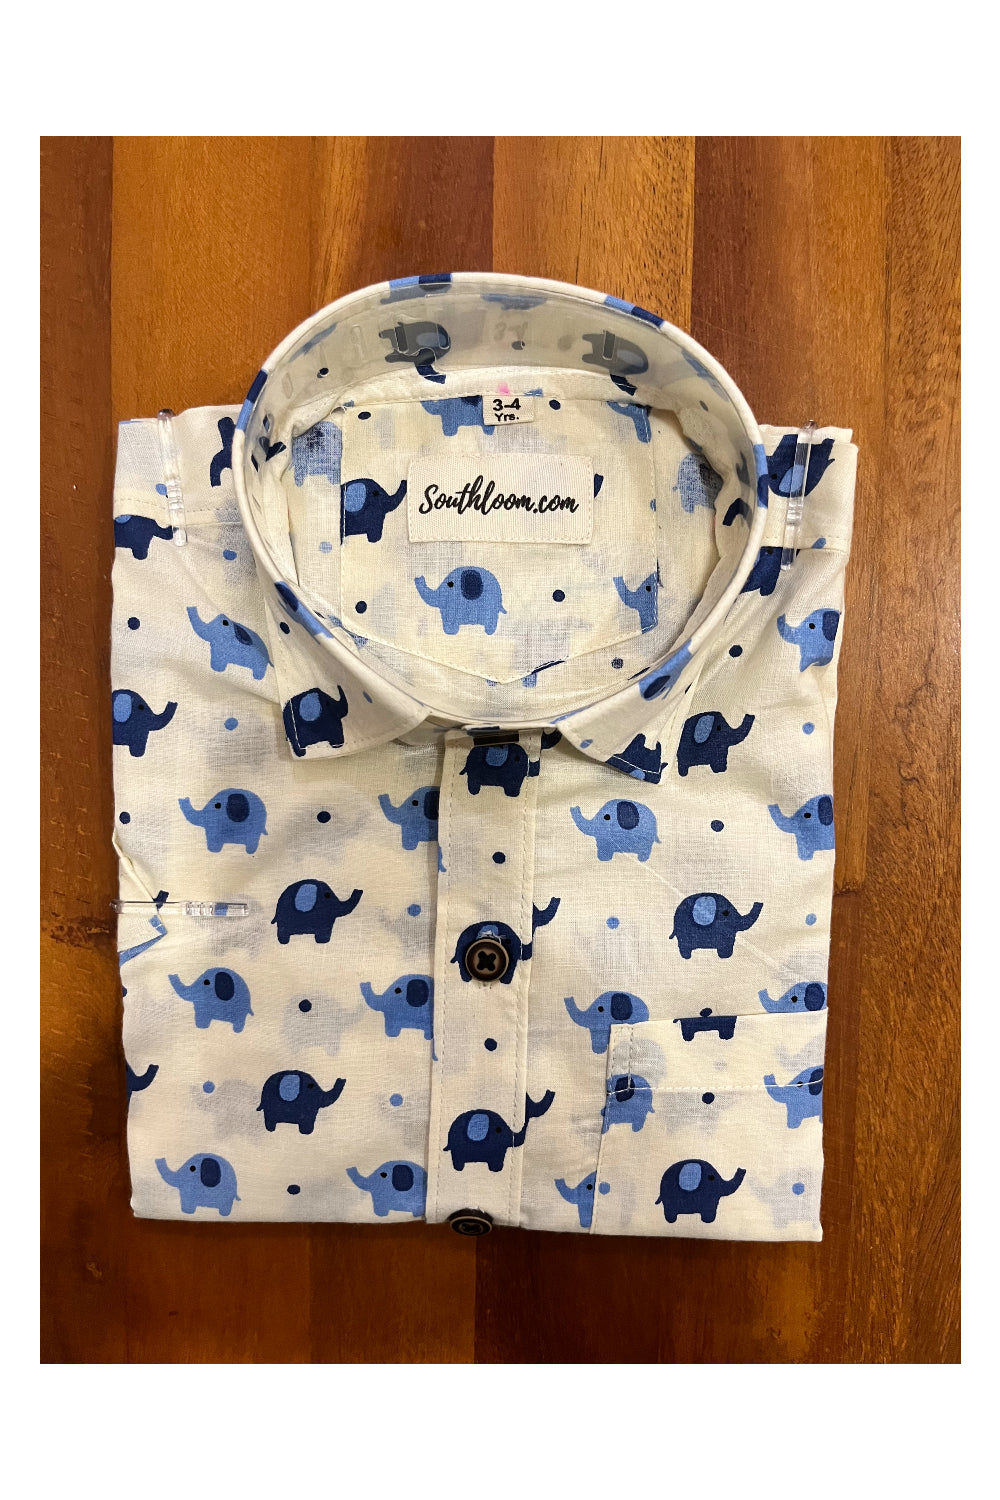 Southloom Jaipur Cotton Blue Elephant Hand Block Printed Shirt For Kids (Half Sleeves)